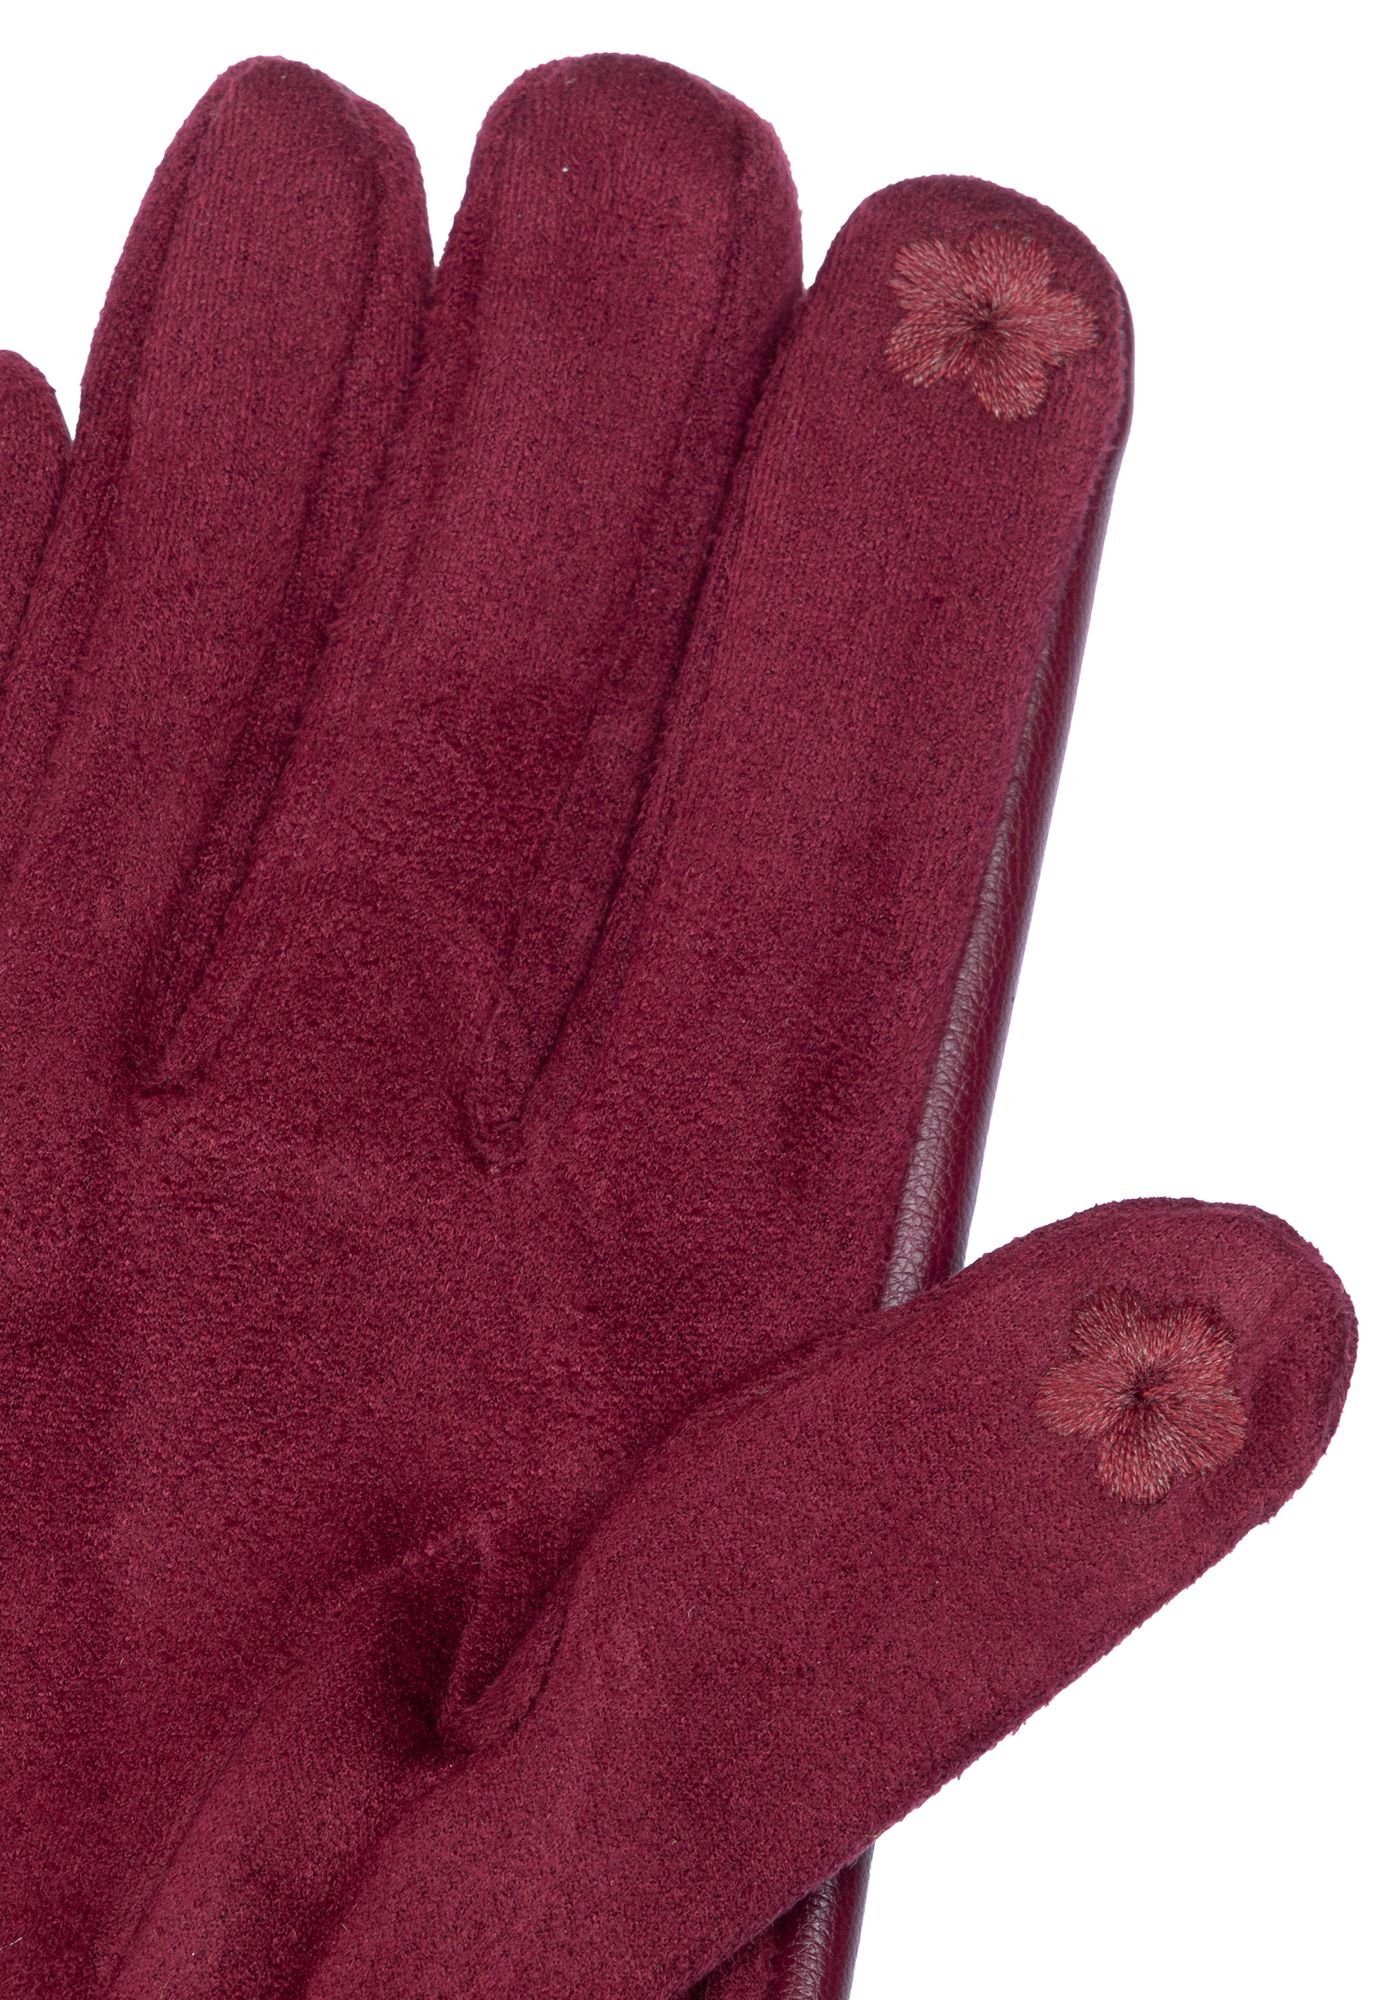 Damen Strickhandschuhe weinrot Caspar uni GLV015 elegante Handschuhe klassisch